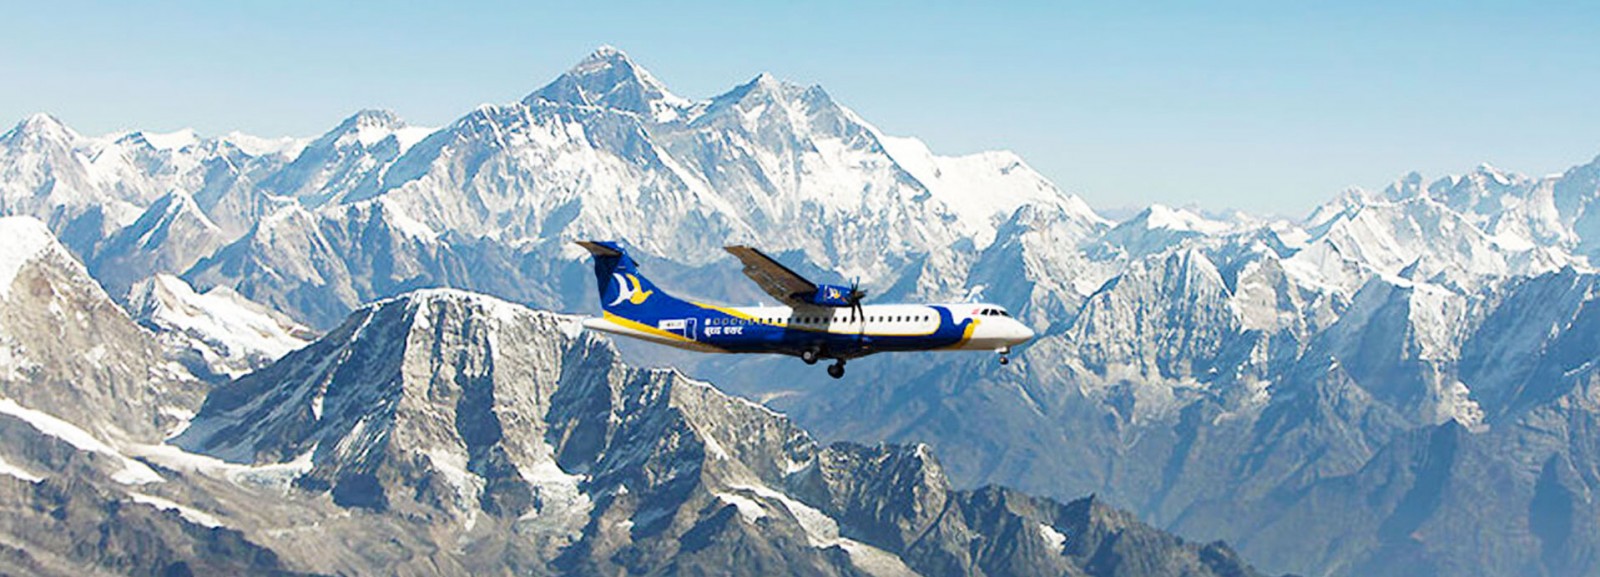 Everest Mountain Flight Nepal Tour